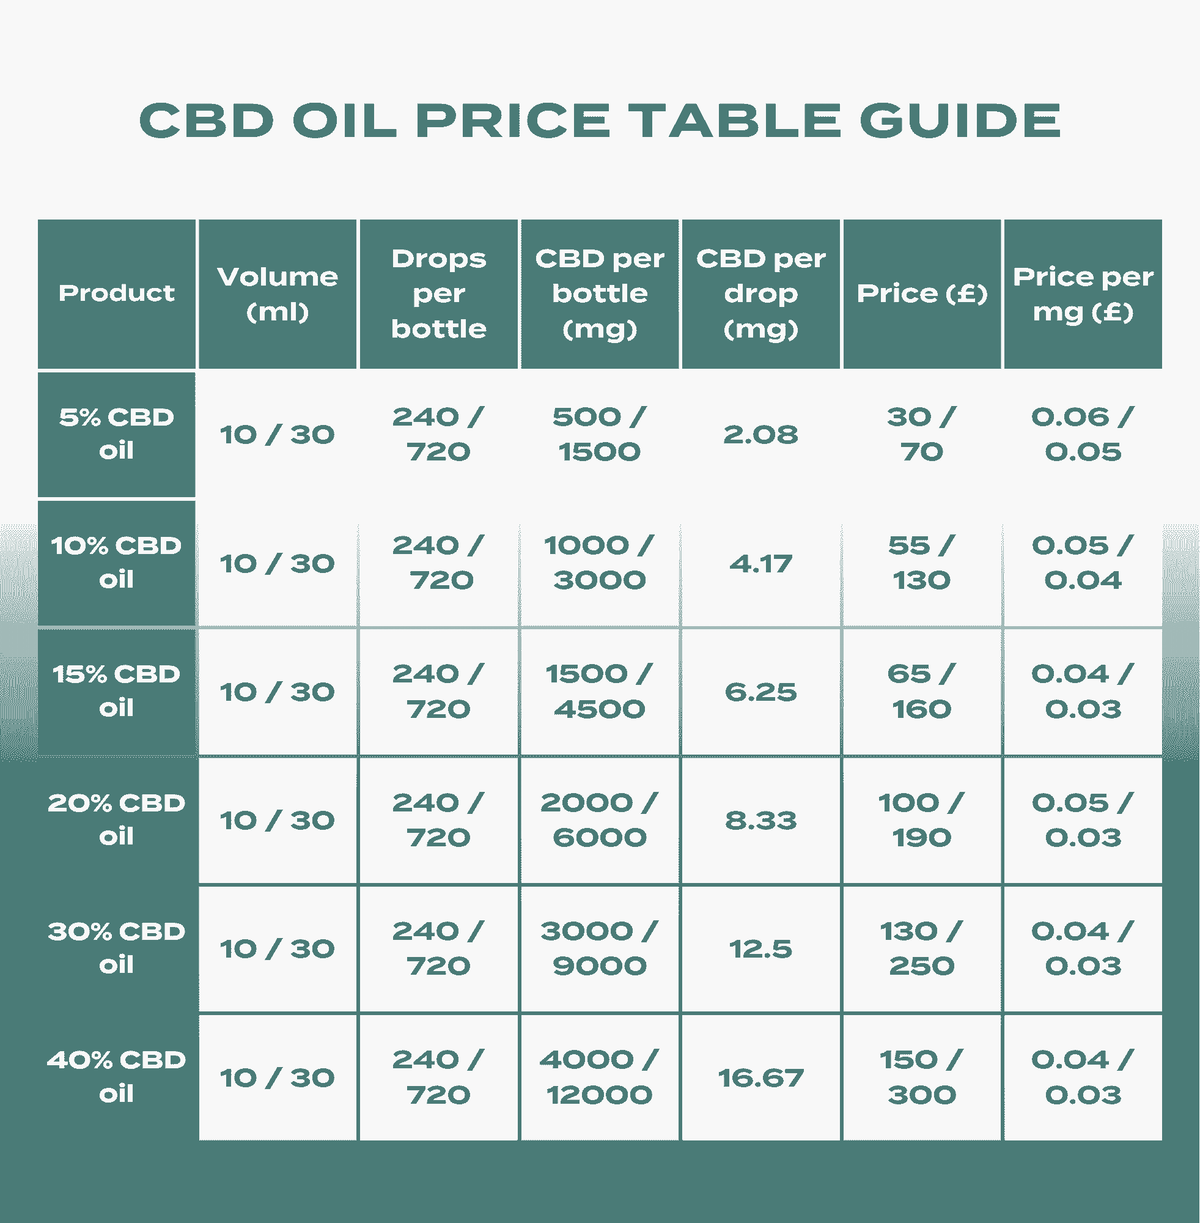 Naturecan CBD Oil Price Table Guide